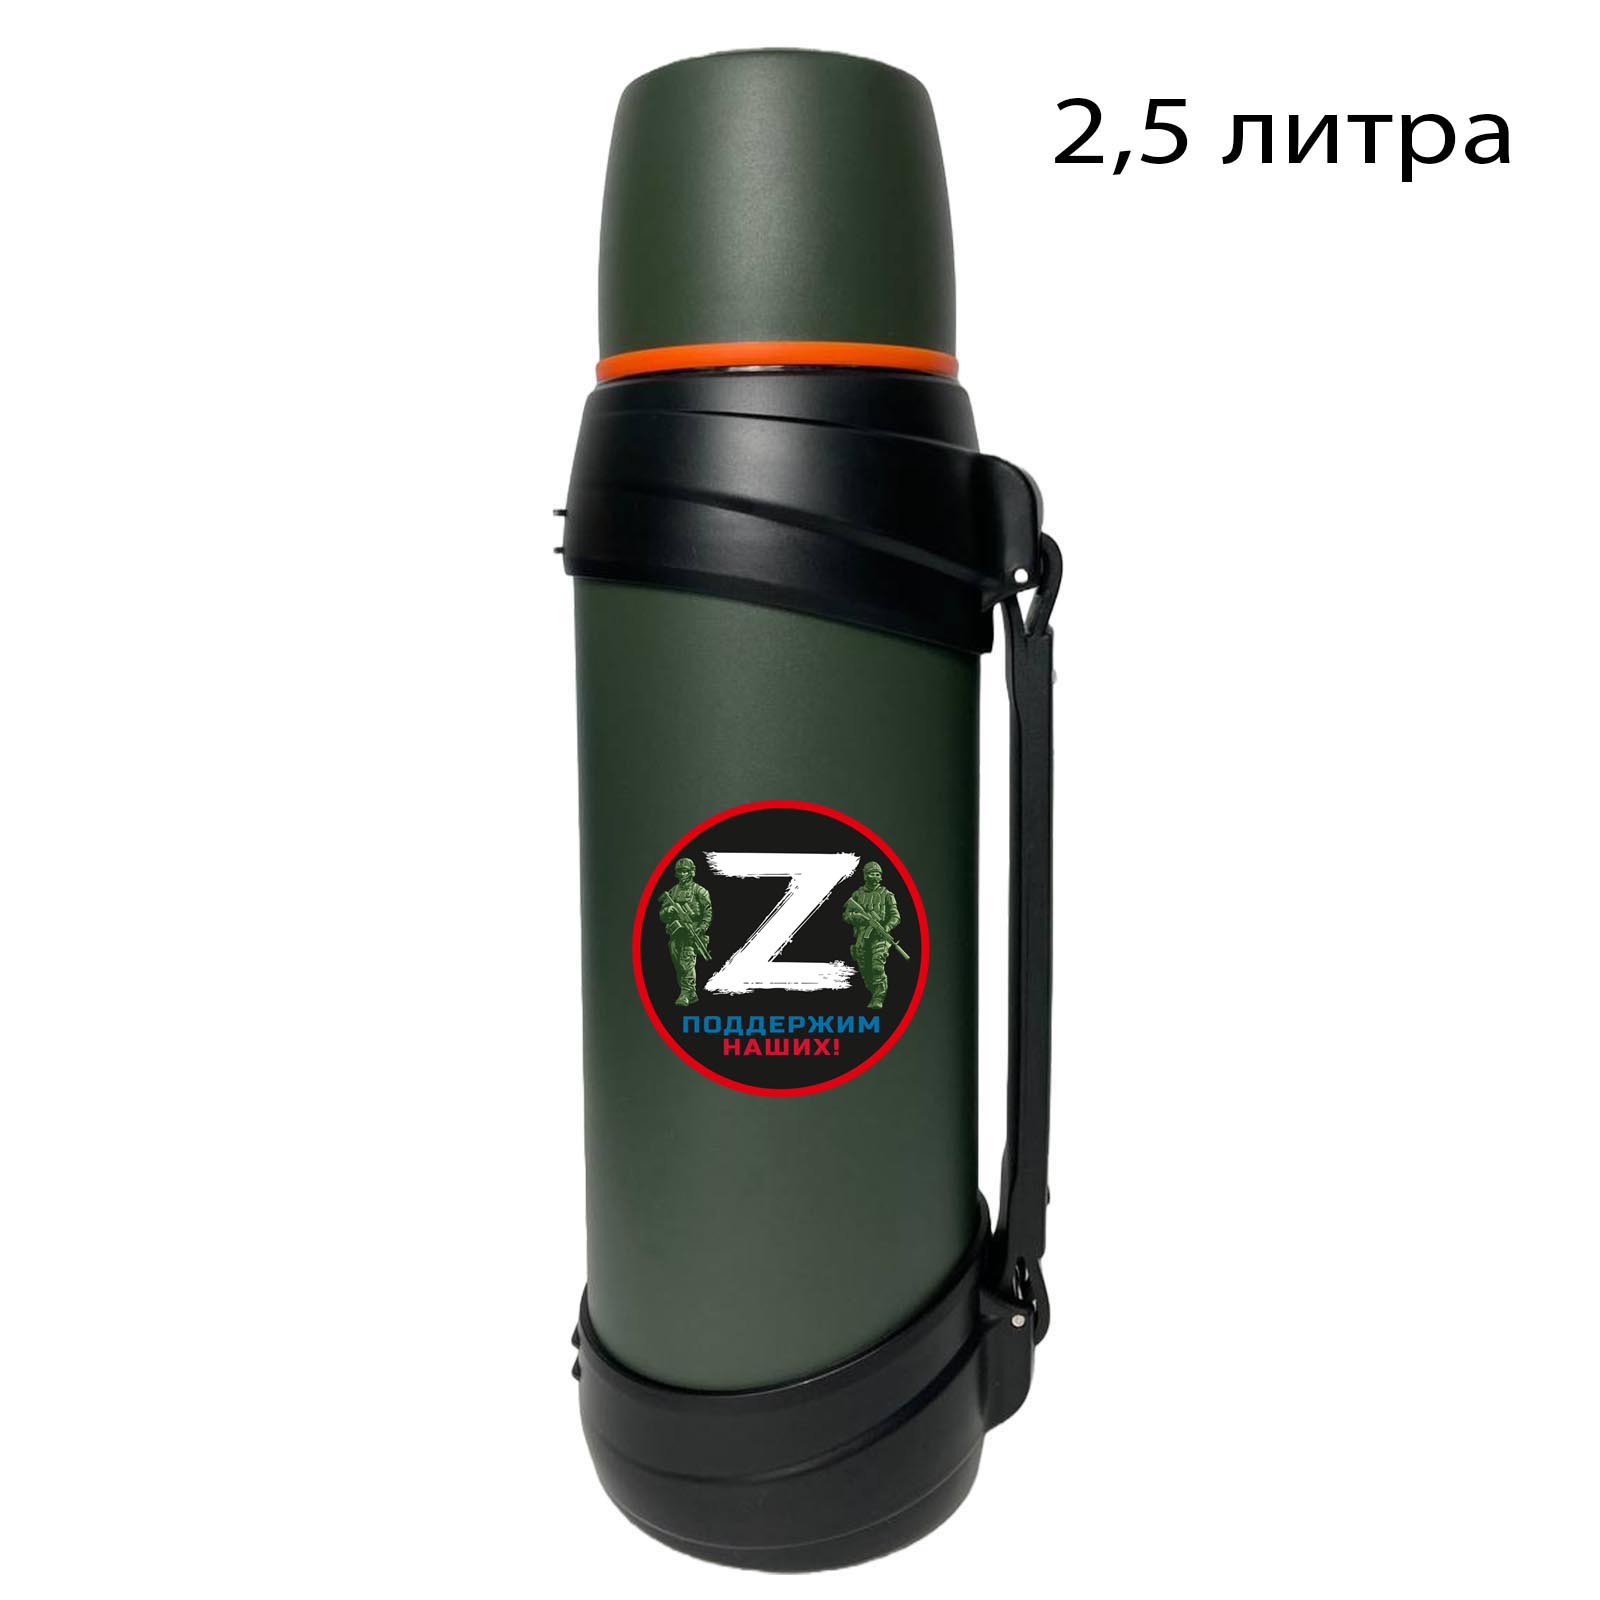 Армейский термос Z оливковый на 2,5 л